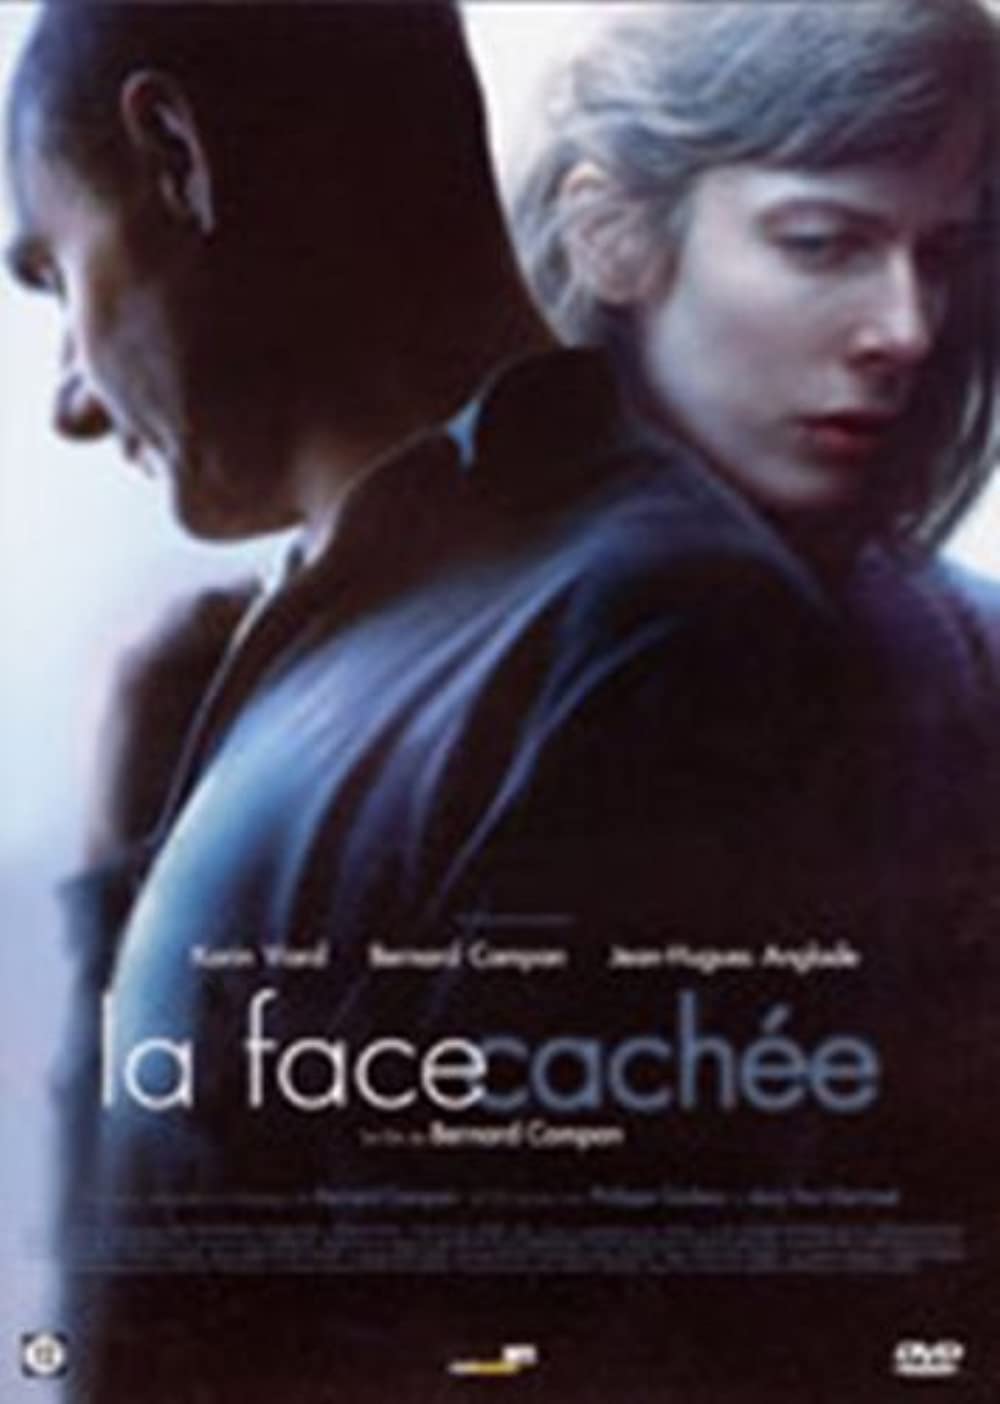 La face cachée Aka Hidden Face (2007)